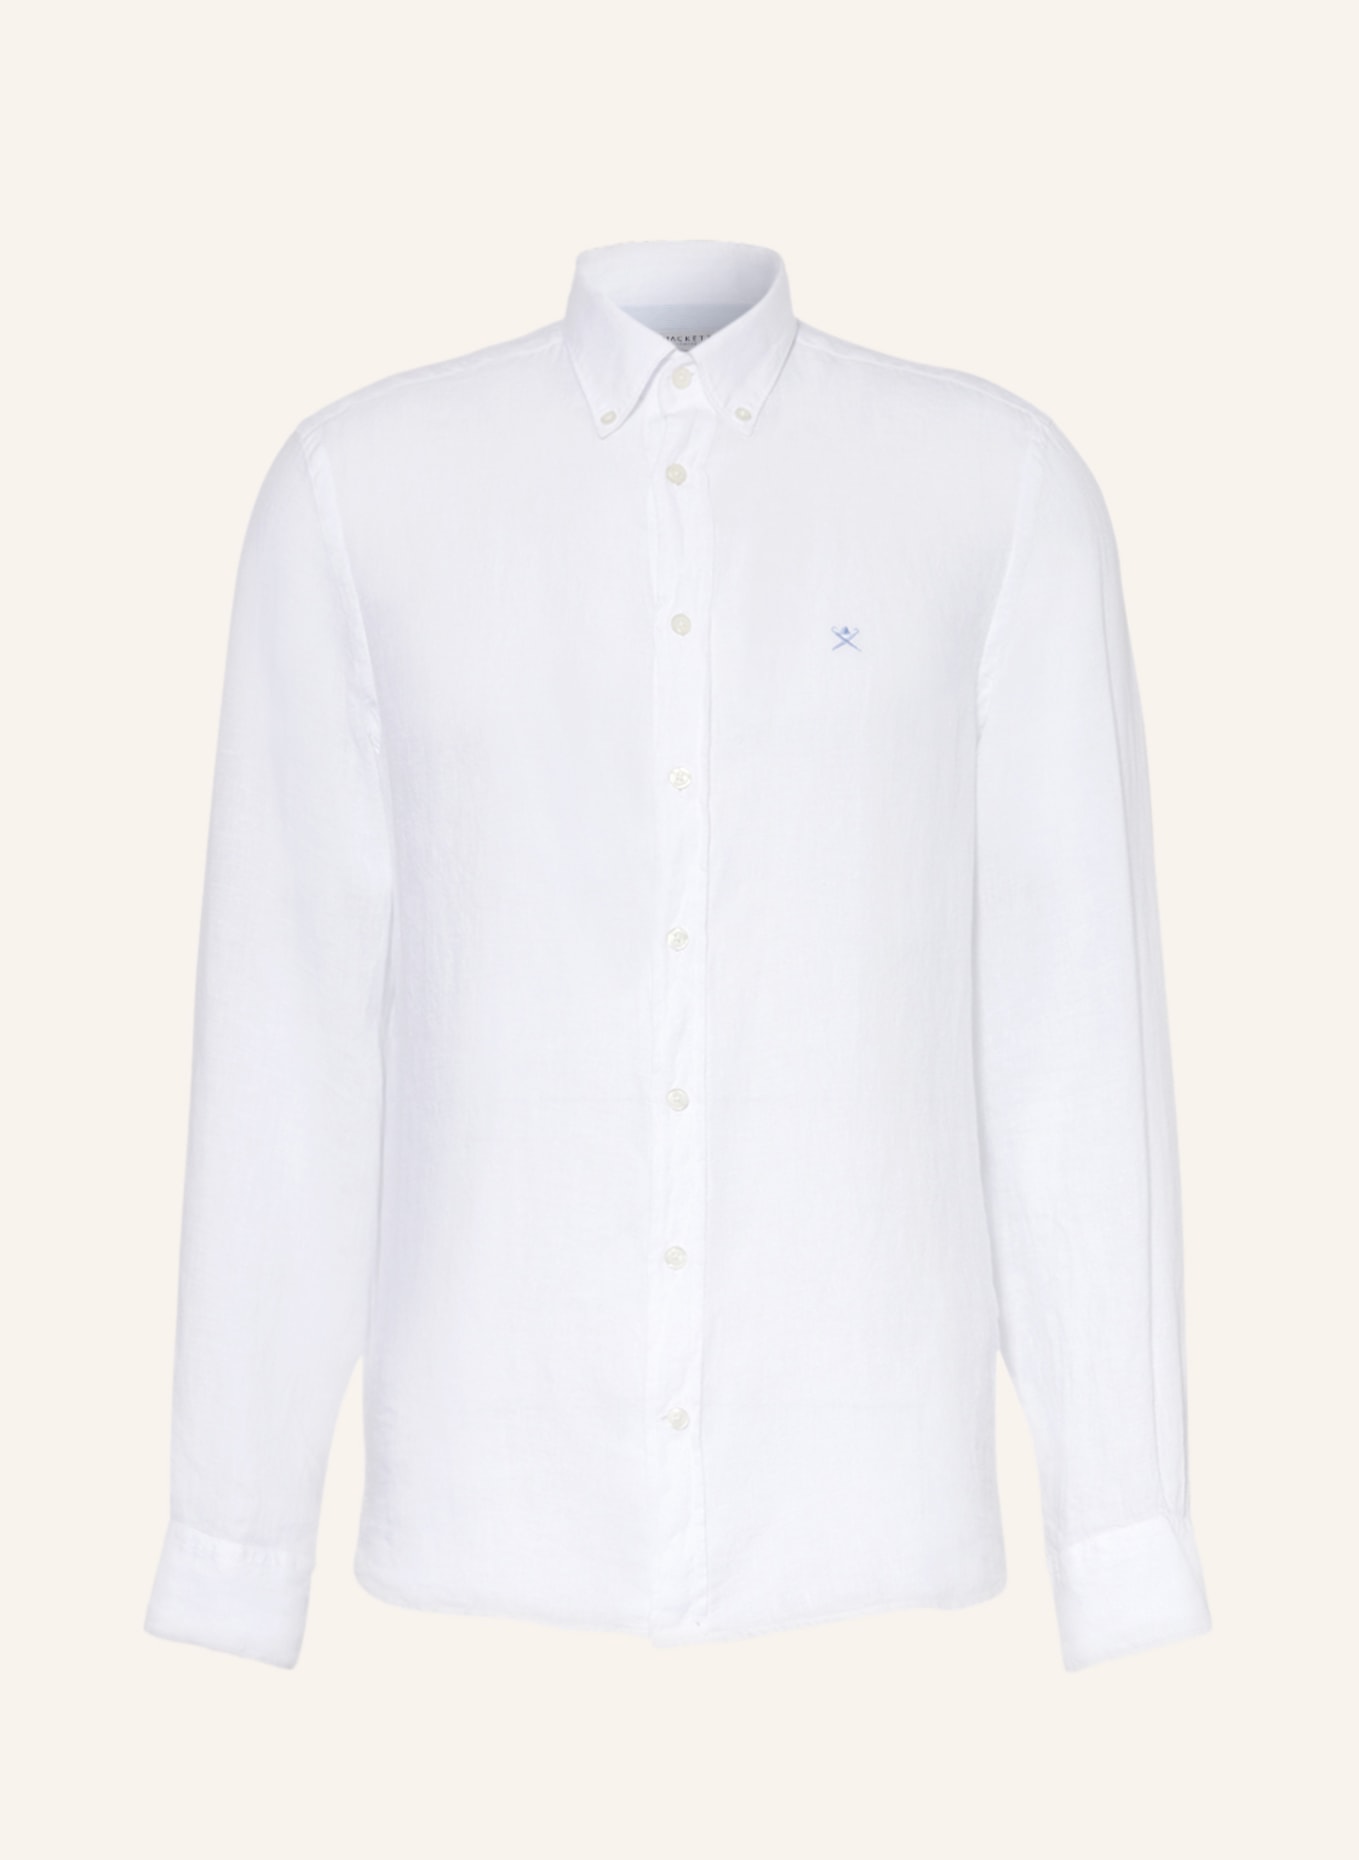 HACKETT LONDON Leinenhemd Slim Fit, Farbe: WEISS (Bild 1)